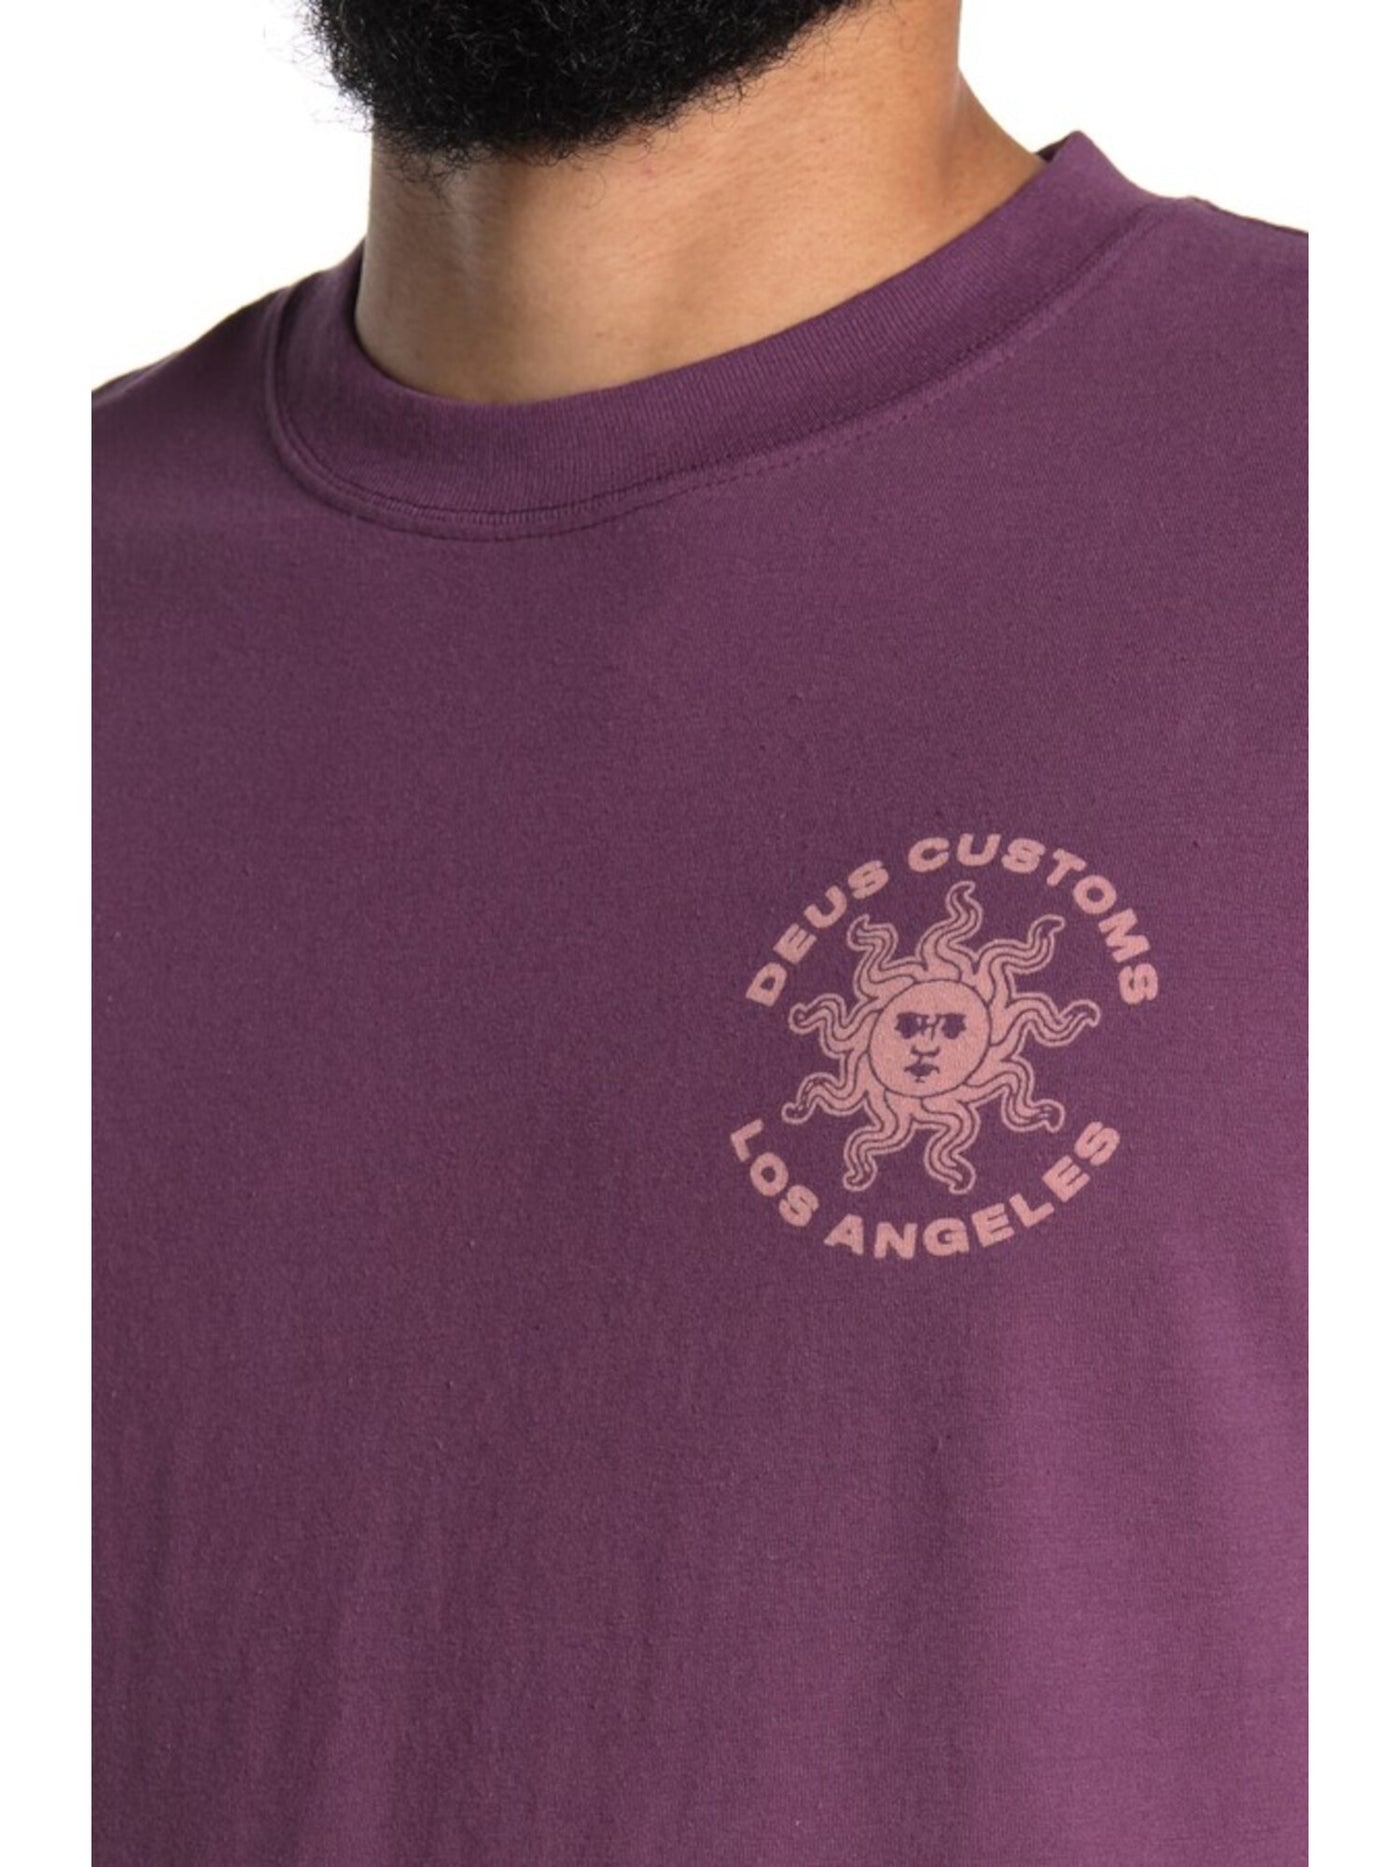 HYBRID APPAREL Mens Purple Logo Graphic Short Sleeve Classic Fit Casual Shirt S